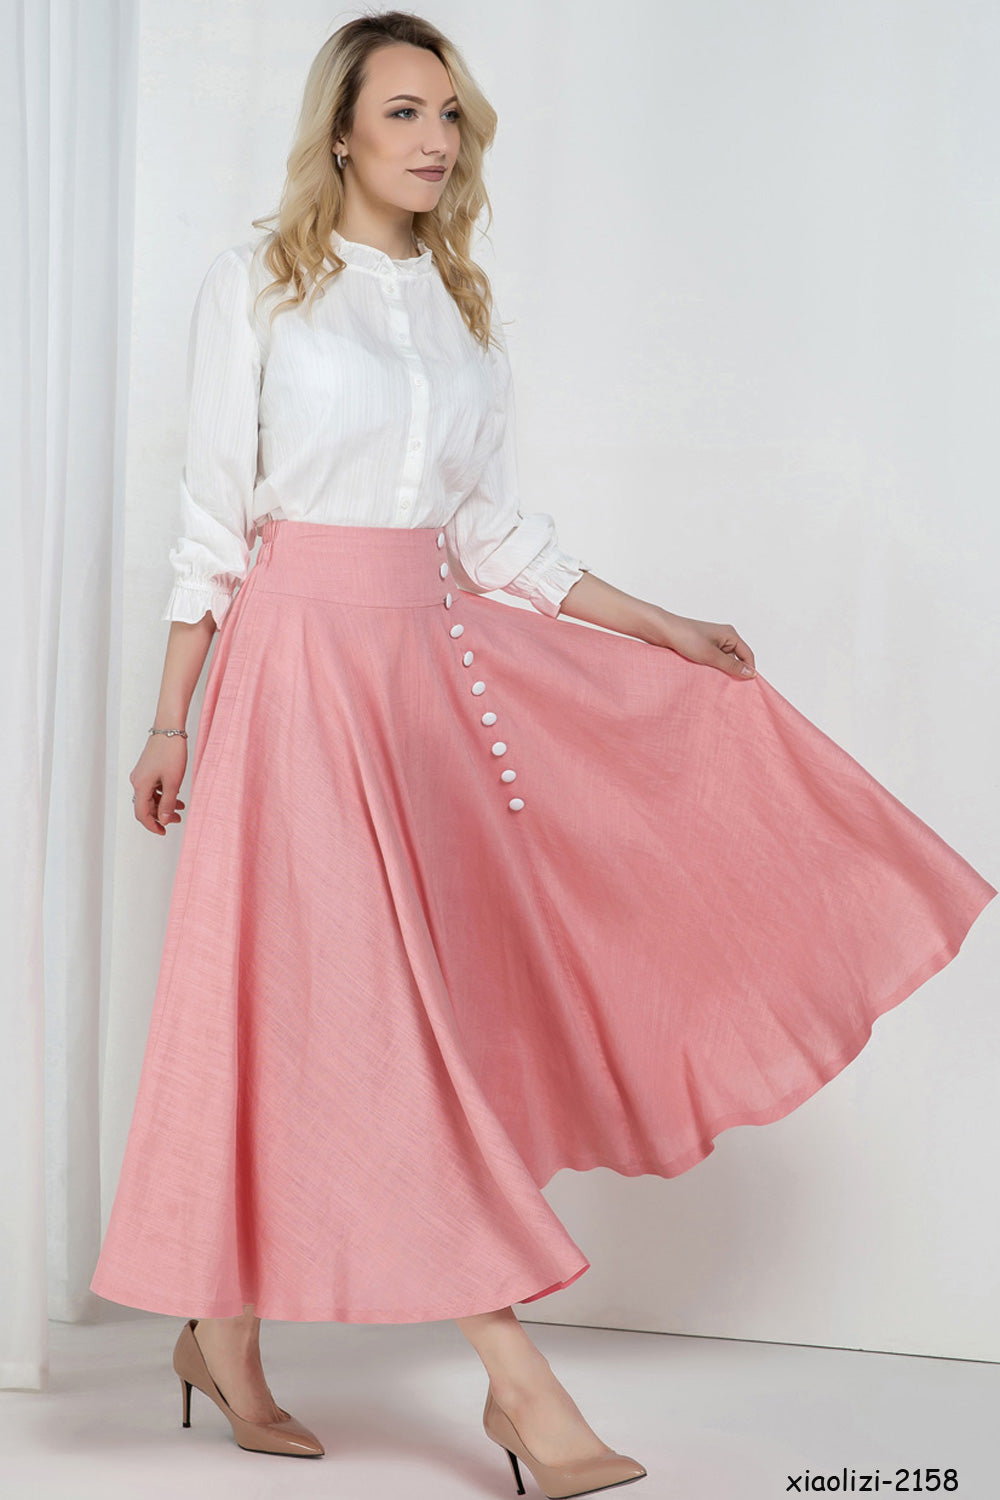 Femine swing circle skirt in Pink 2158#